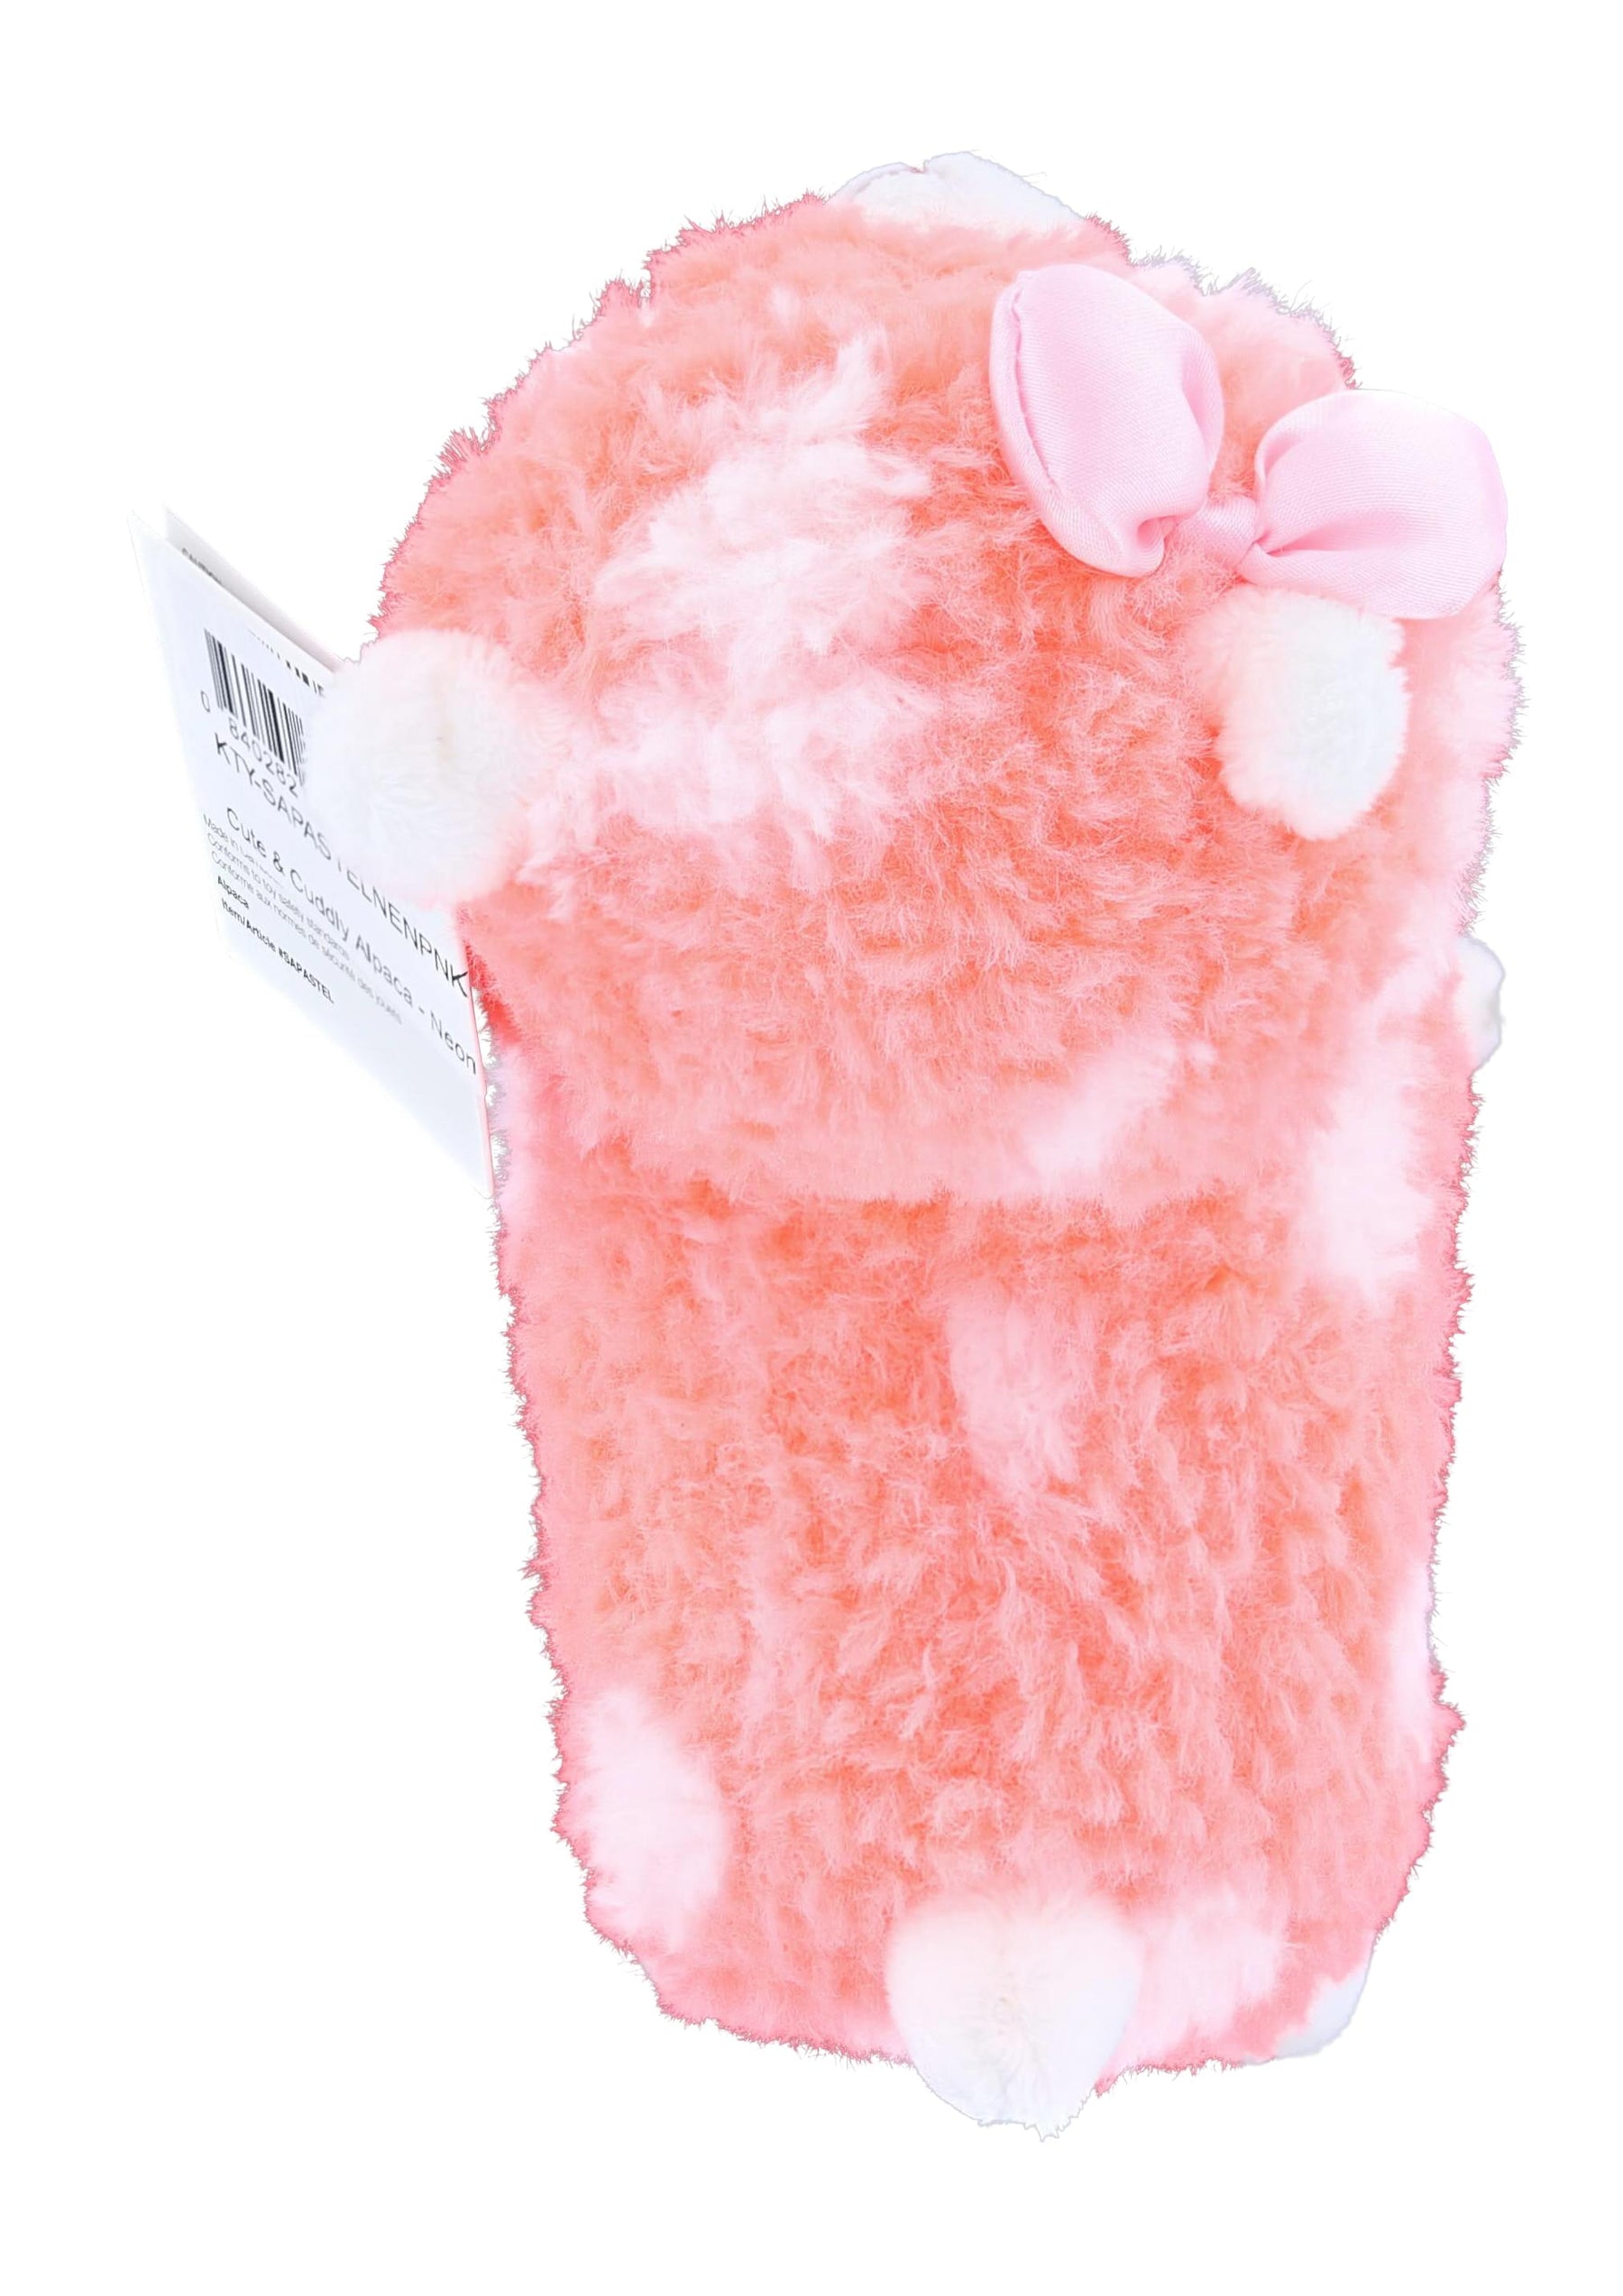 Cute and Cuddly 12 Inch Alpaca Plush | Neon Pink